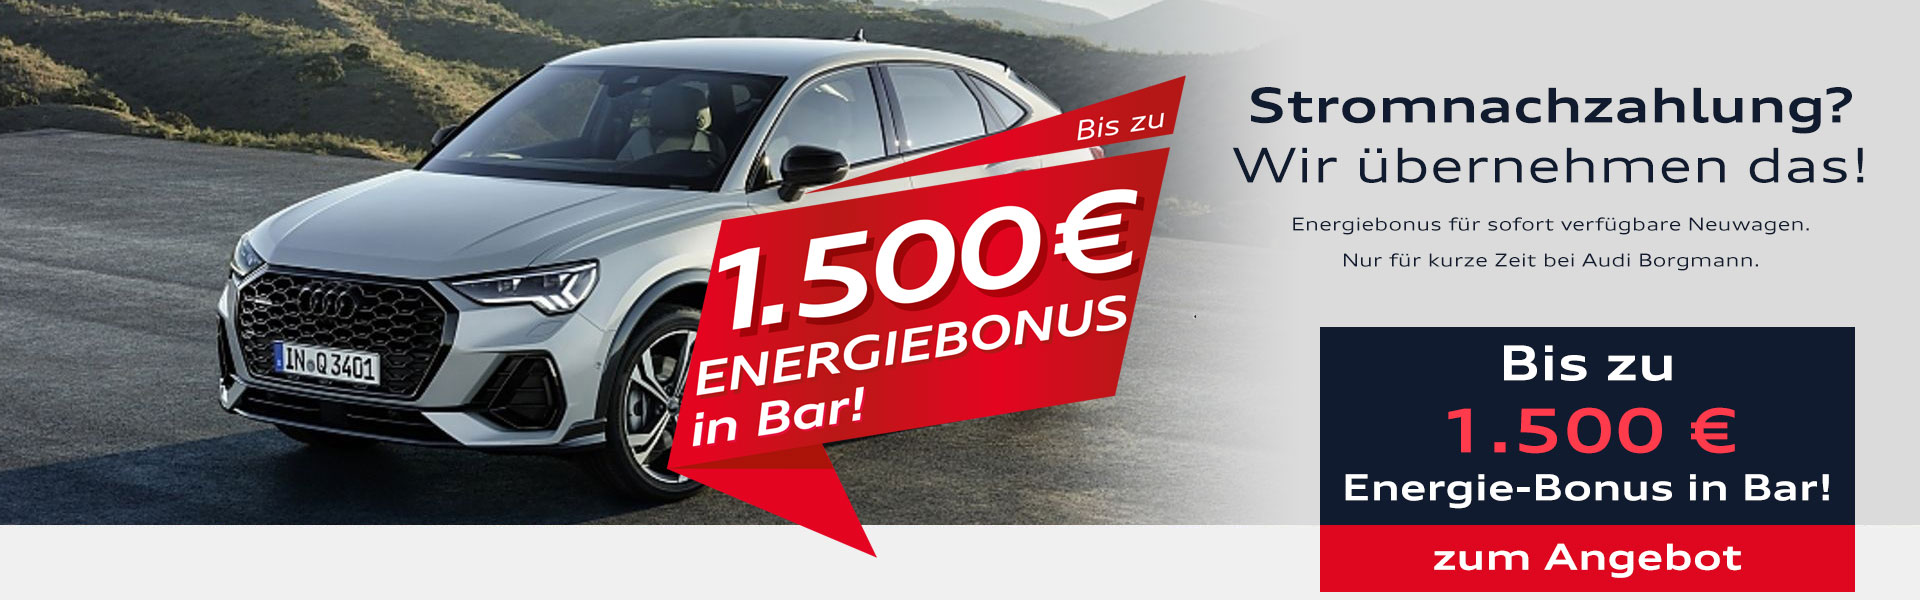 Audi Energiebonus bei Borgmann